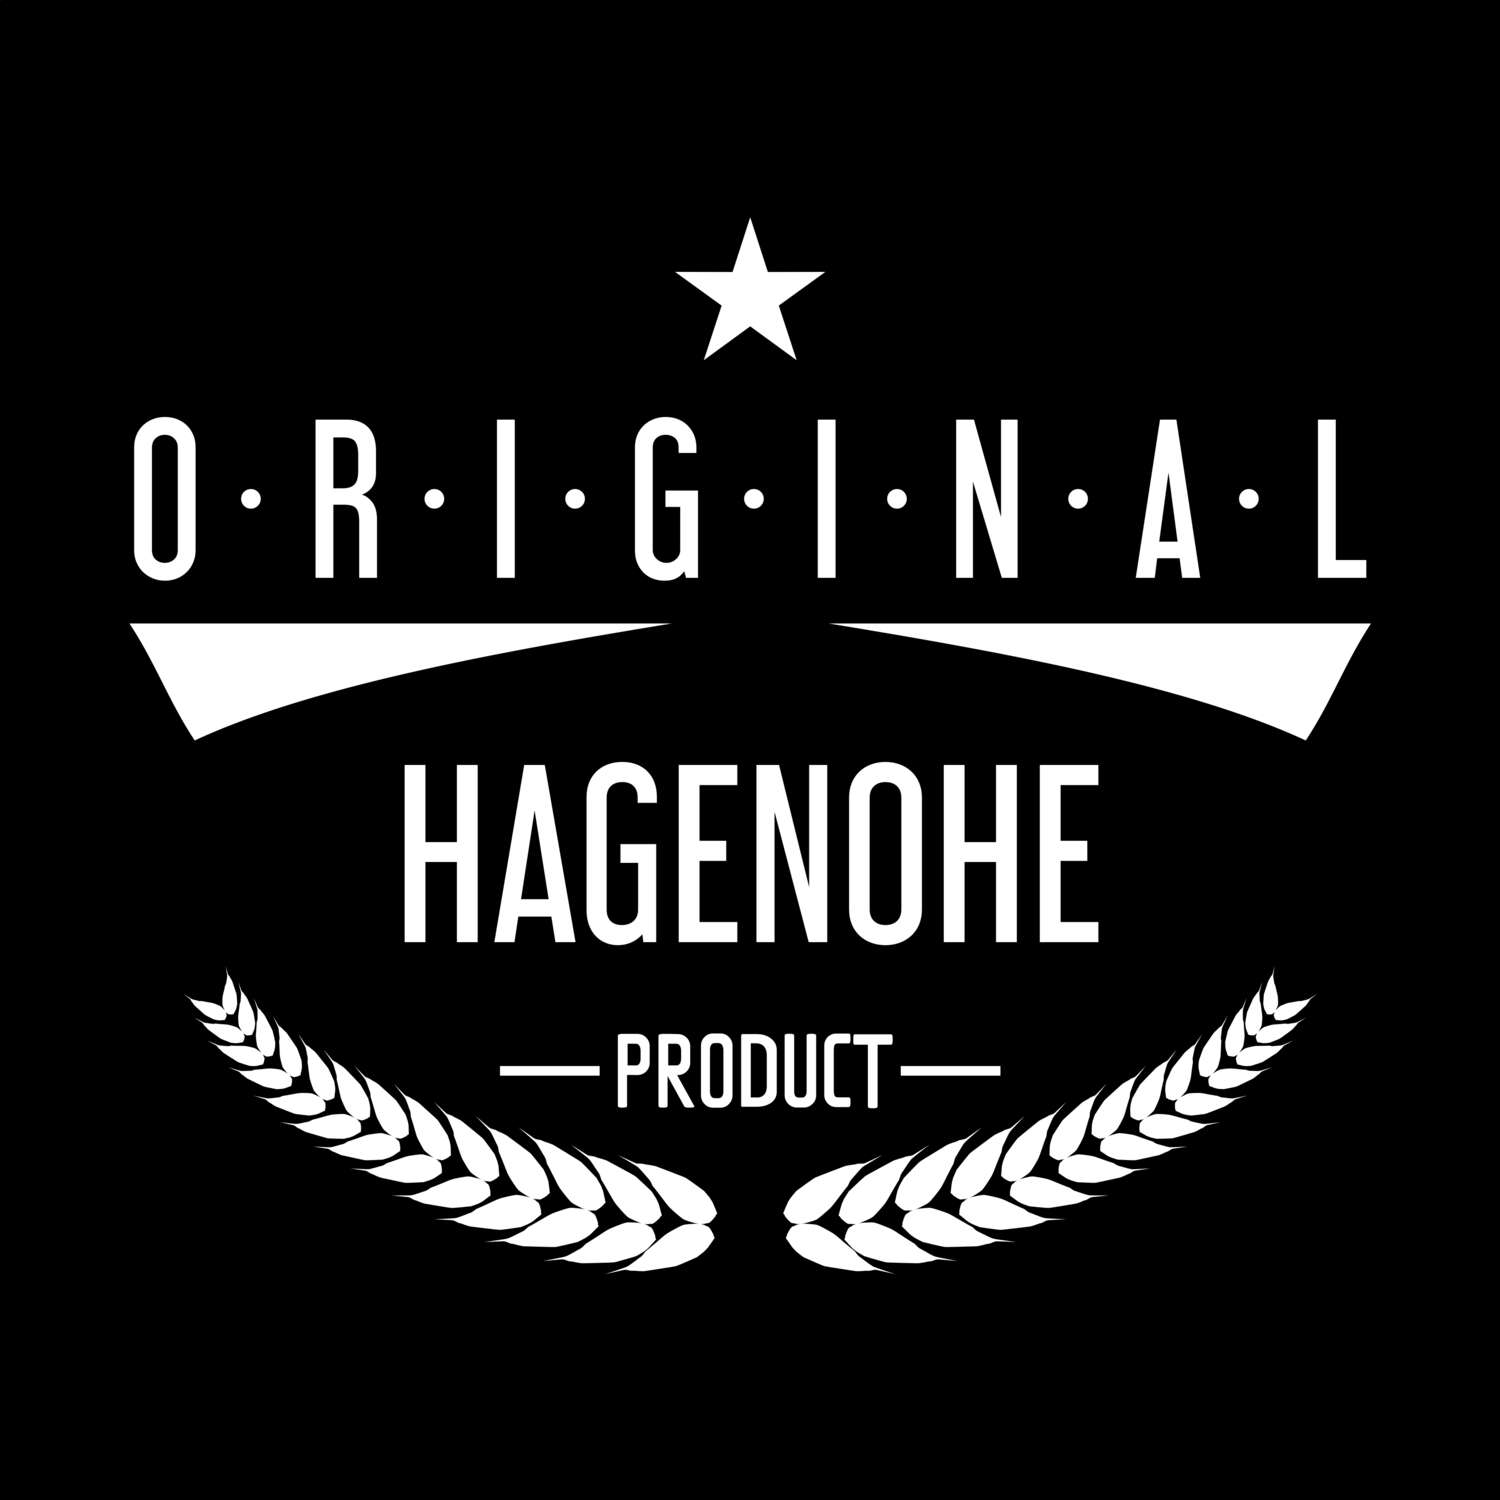 Hagenohe T-Shirt »Original Product«